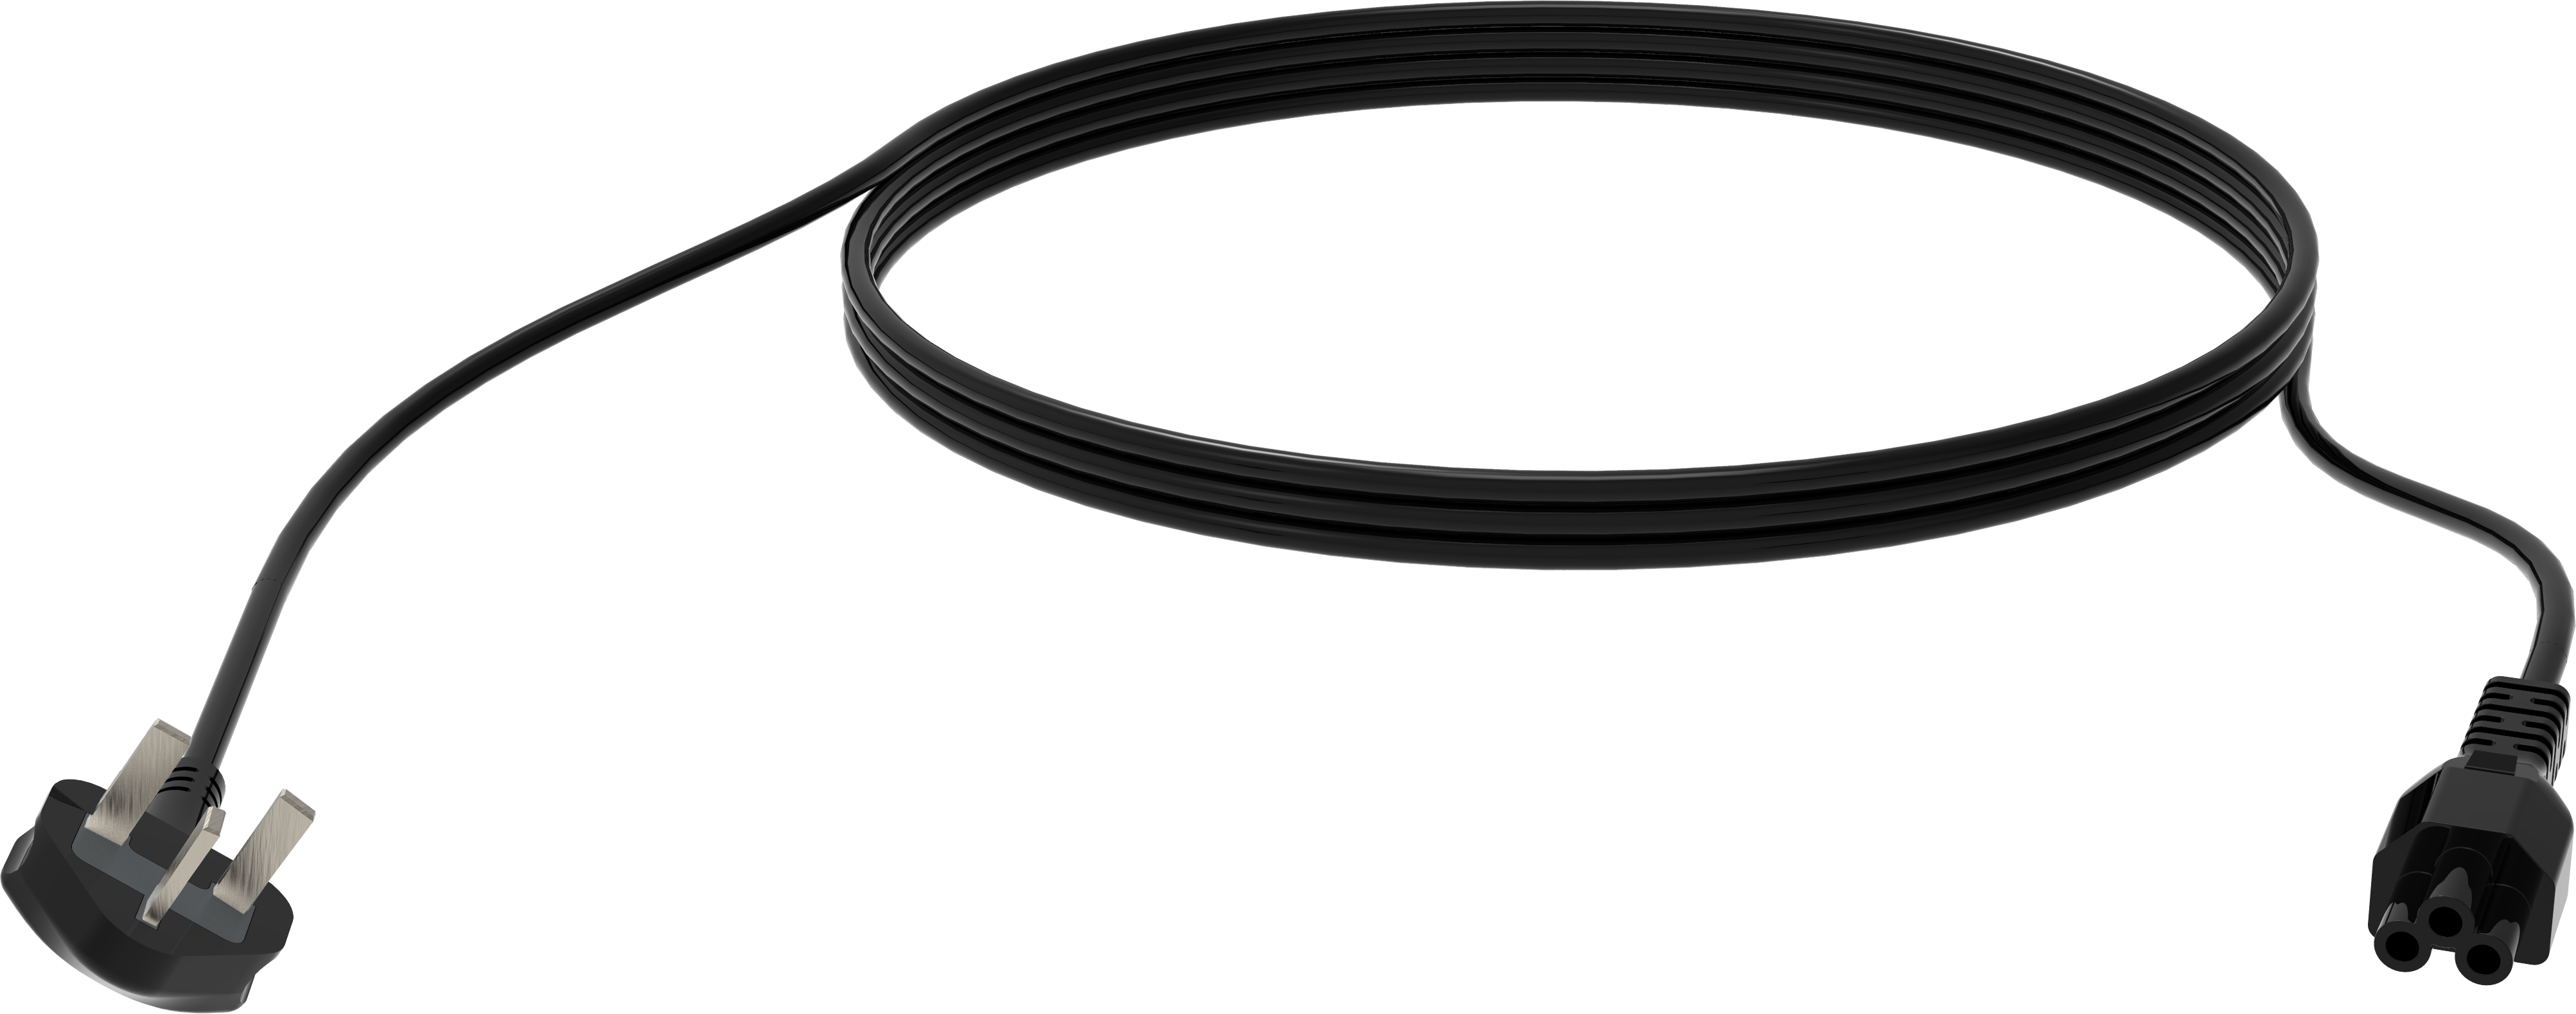 An image showing Zwarte stroomkabel met stekker 'klaverblad' voor VK van 3 m